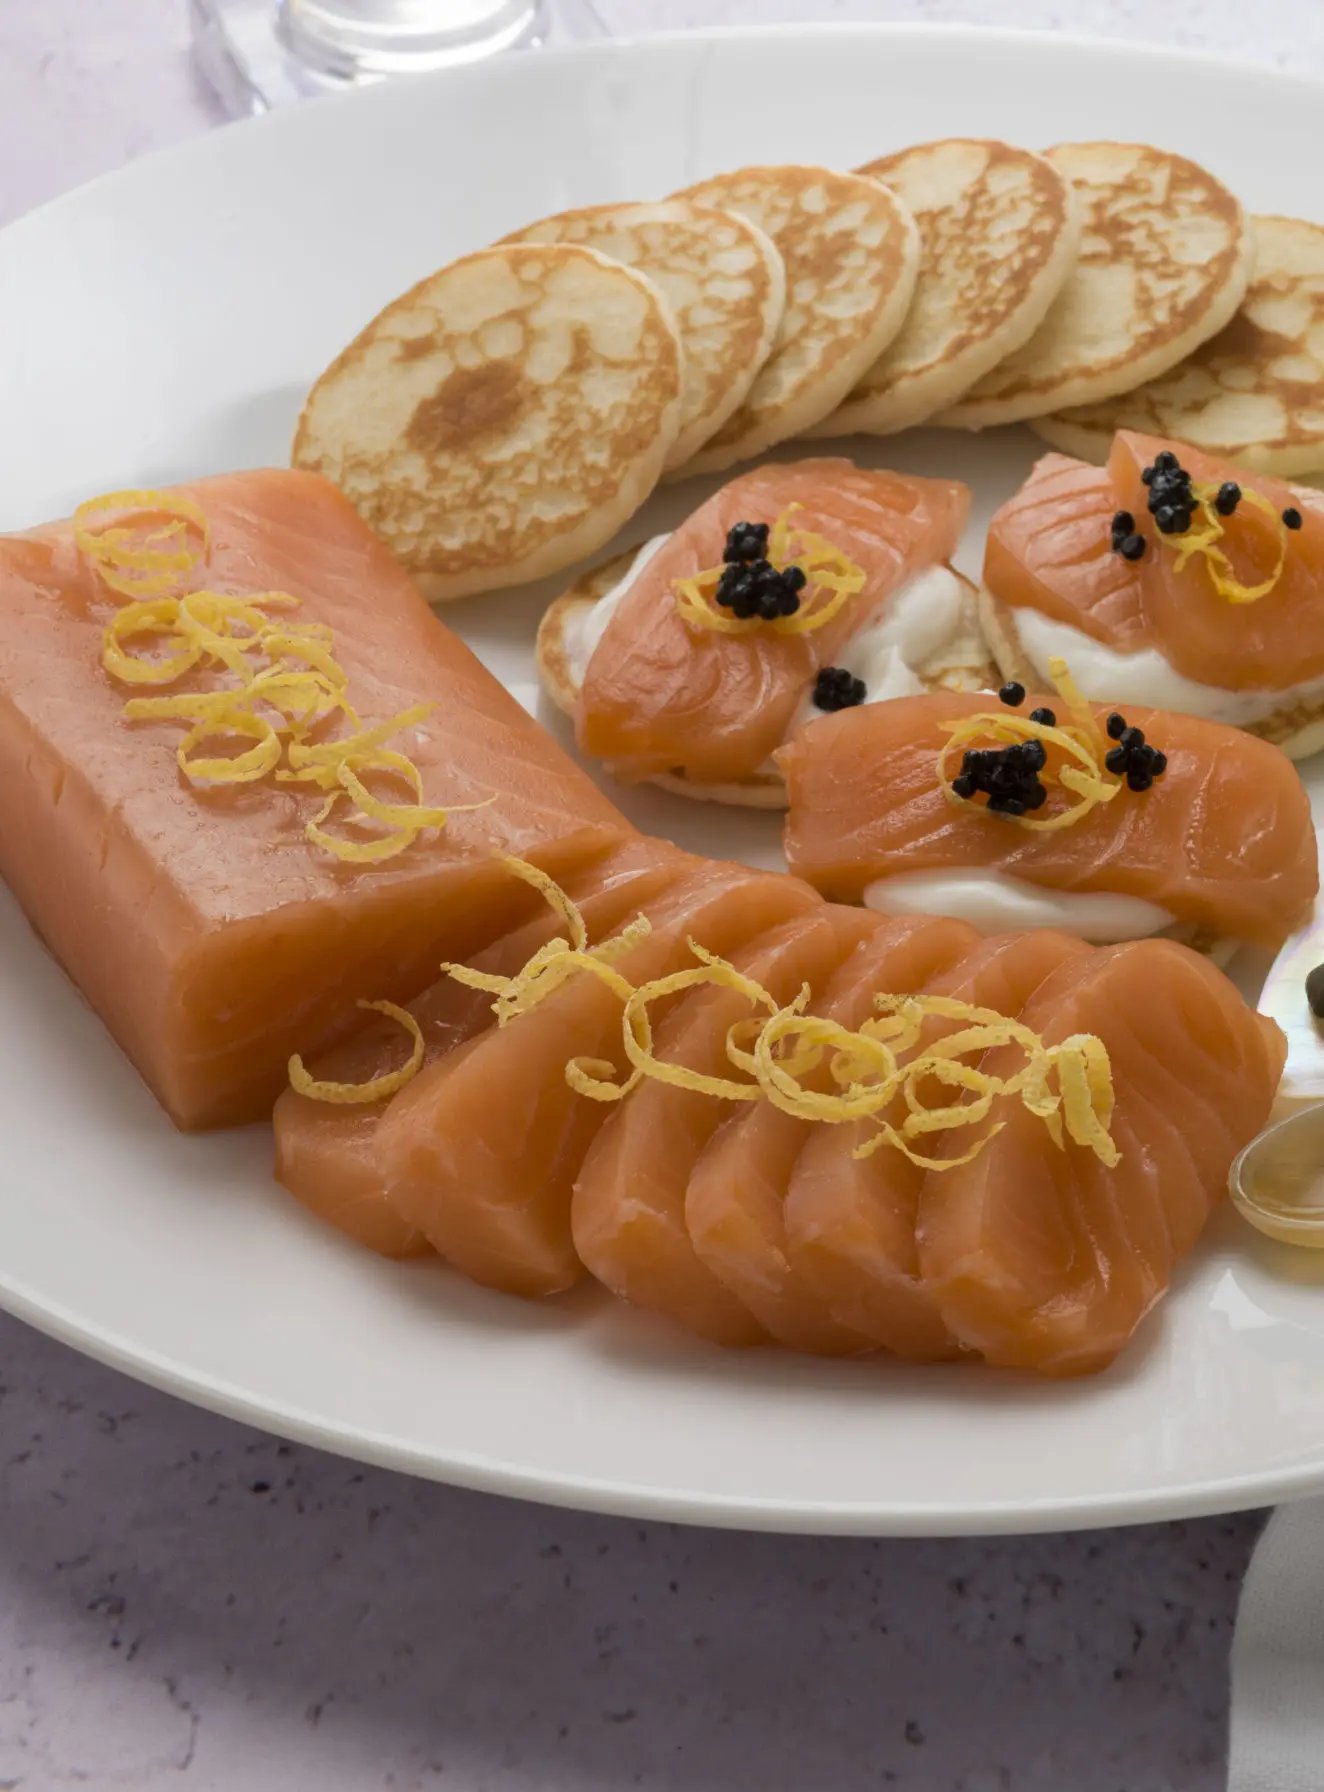 balik smoked salmon - How to serve Balik salmon